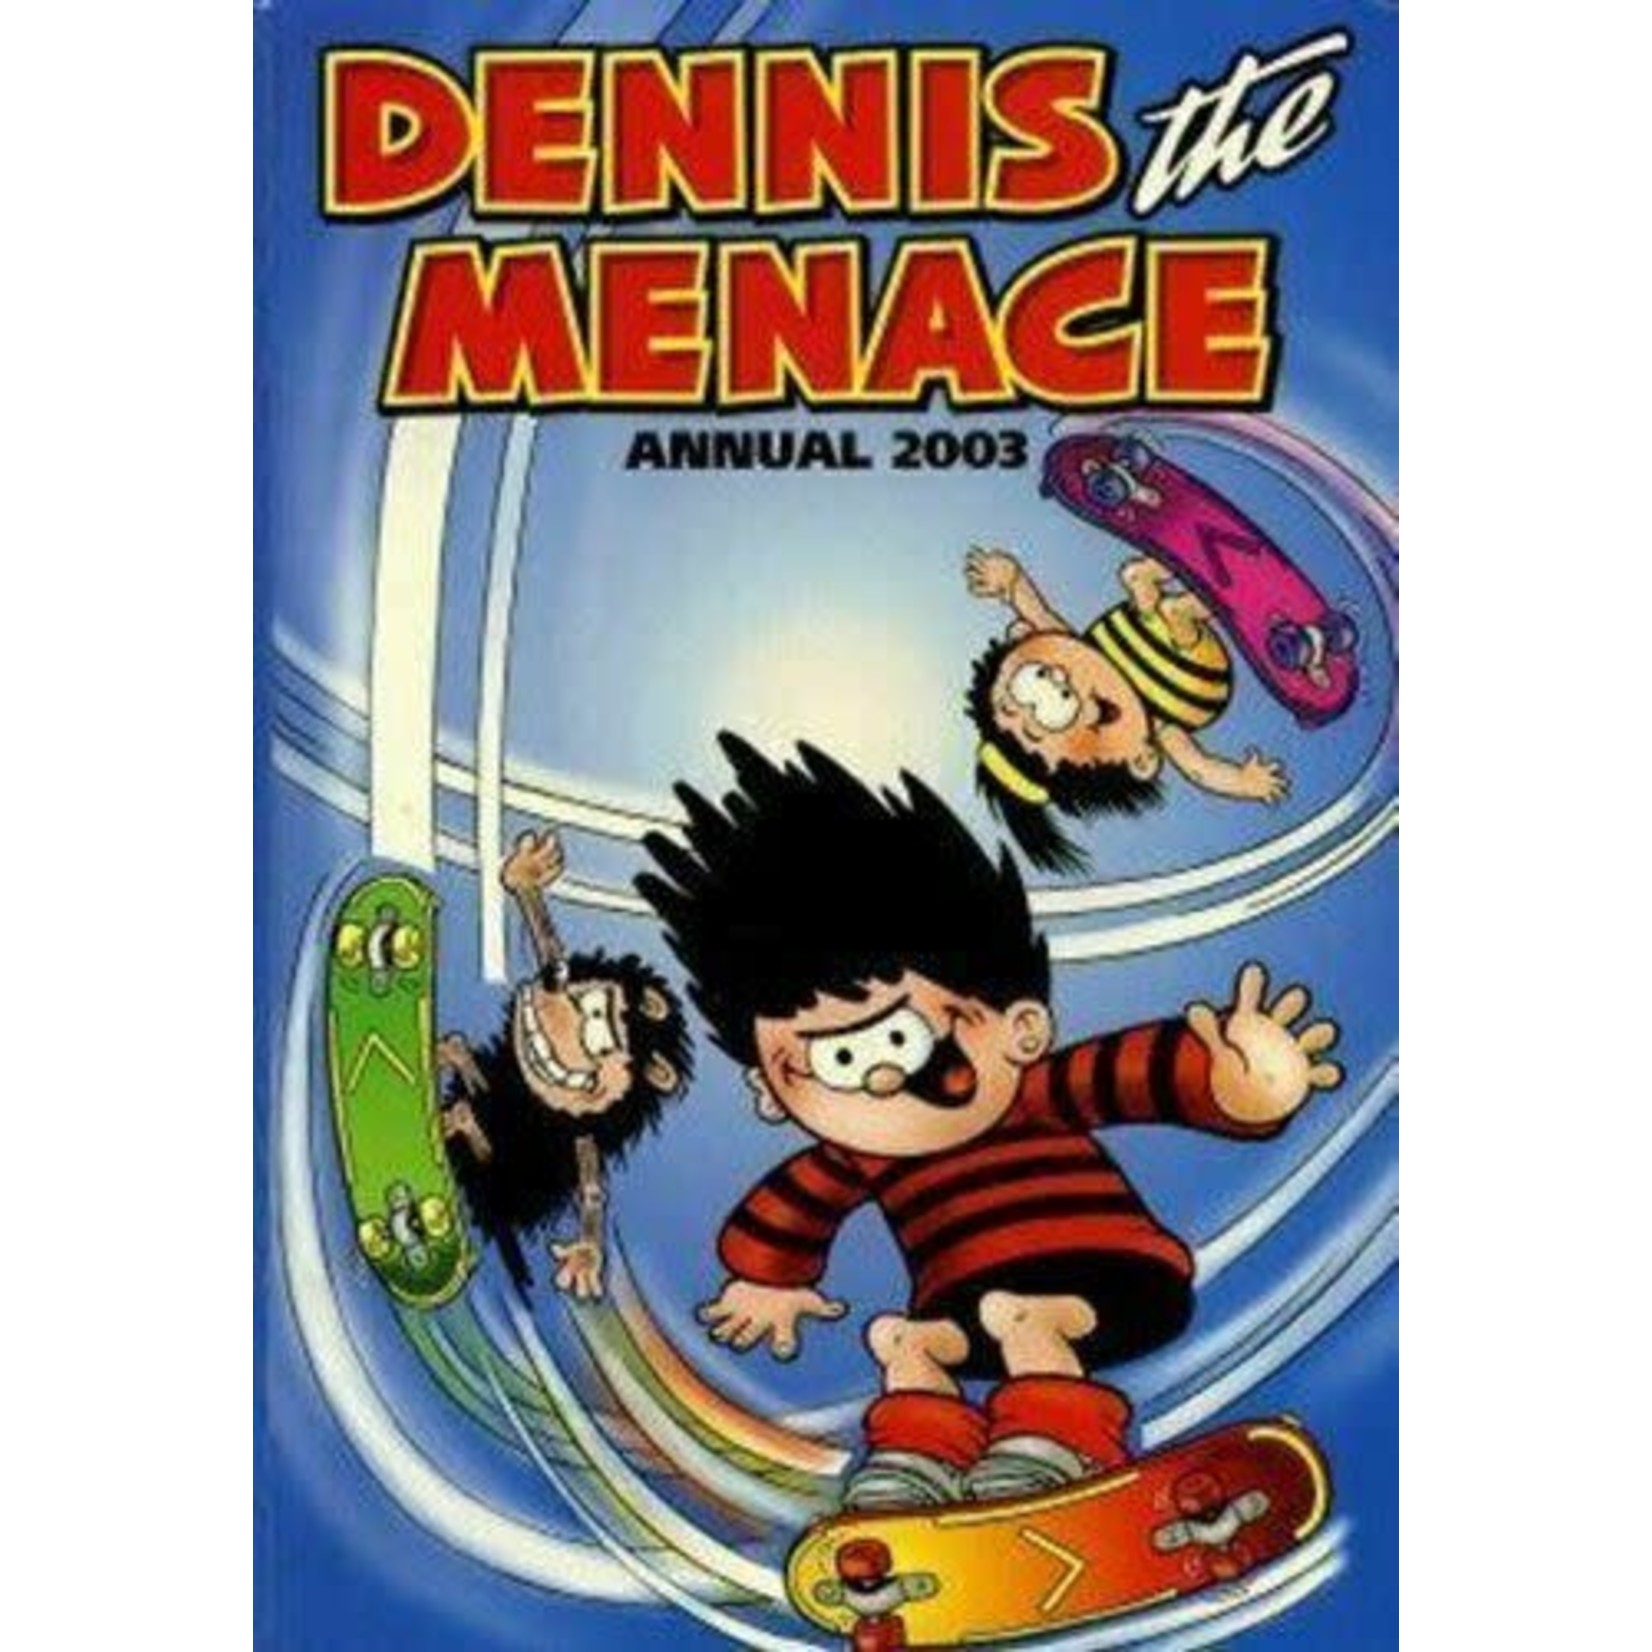 Dennis the Menace Annual 2003